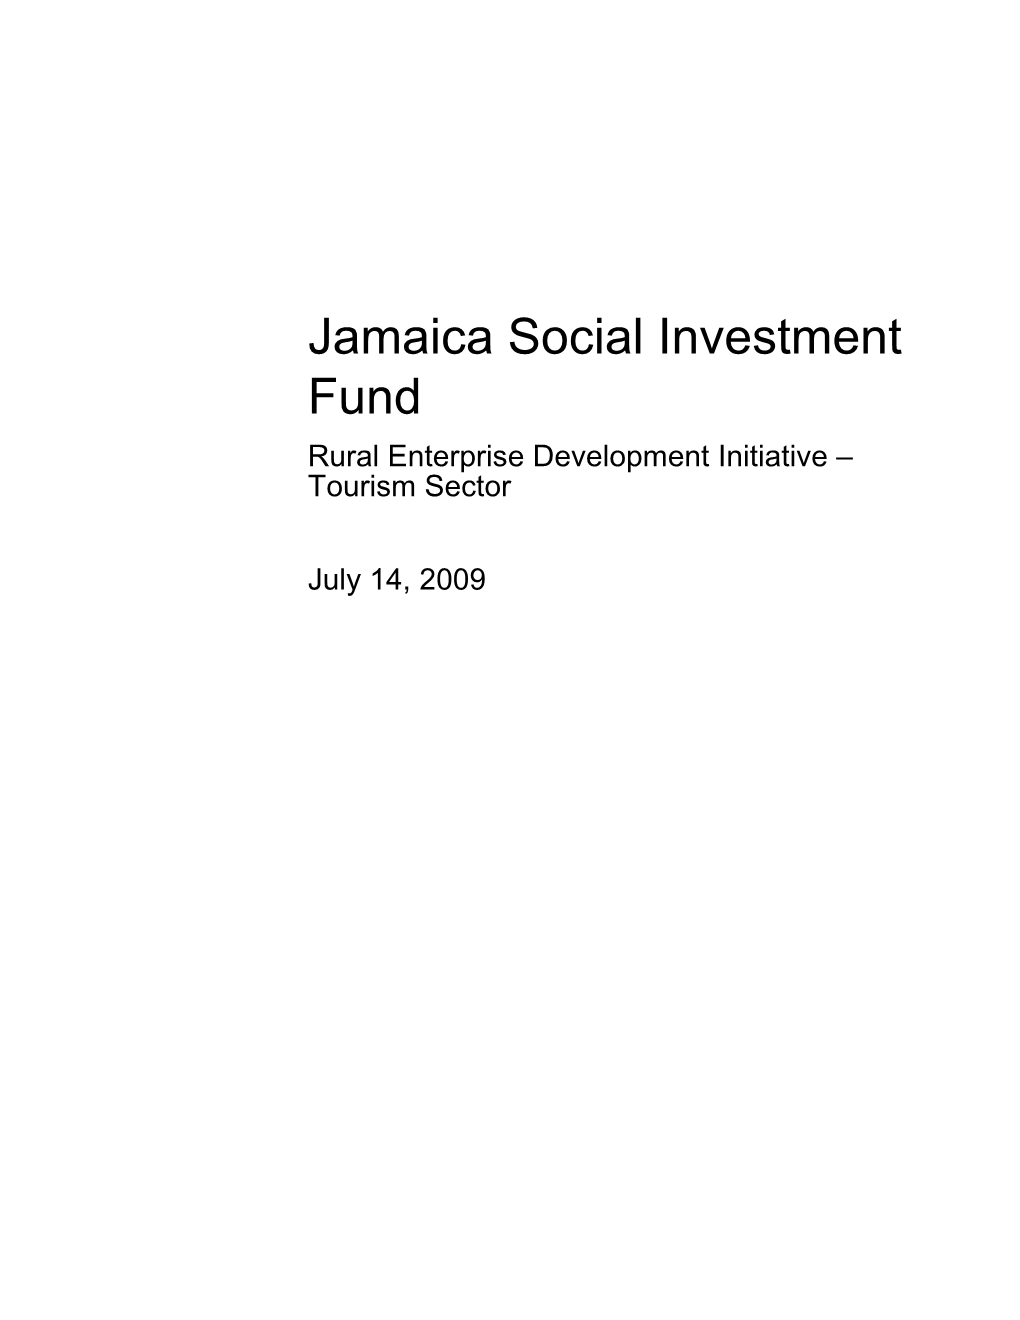 Rural Enterprise Development Initiative – Tourism Sector July 14, 2009